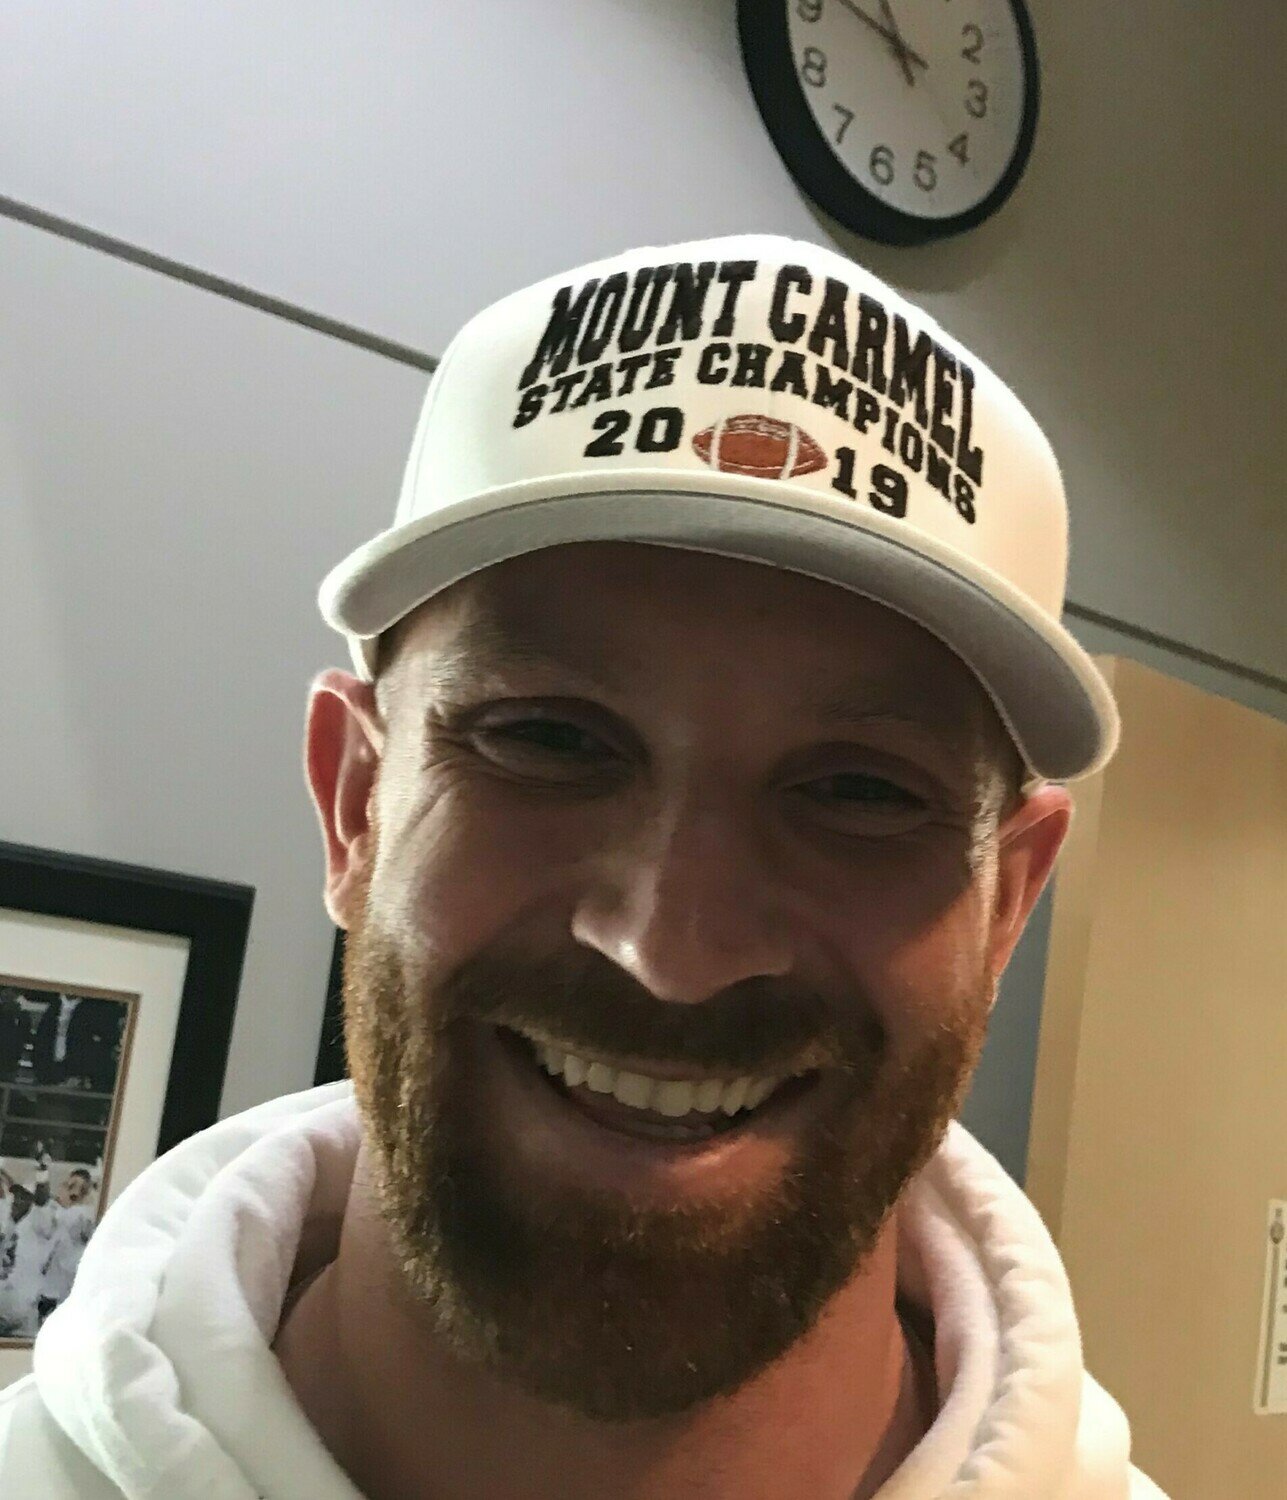 2019 State Champion Hat